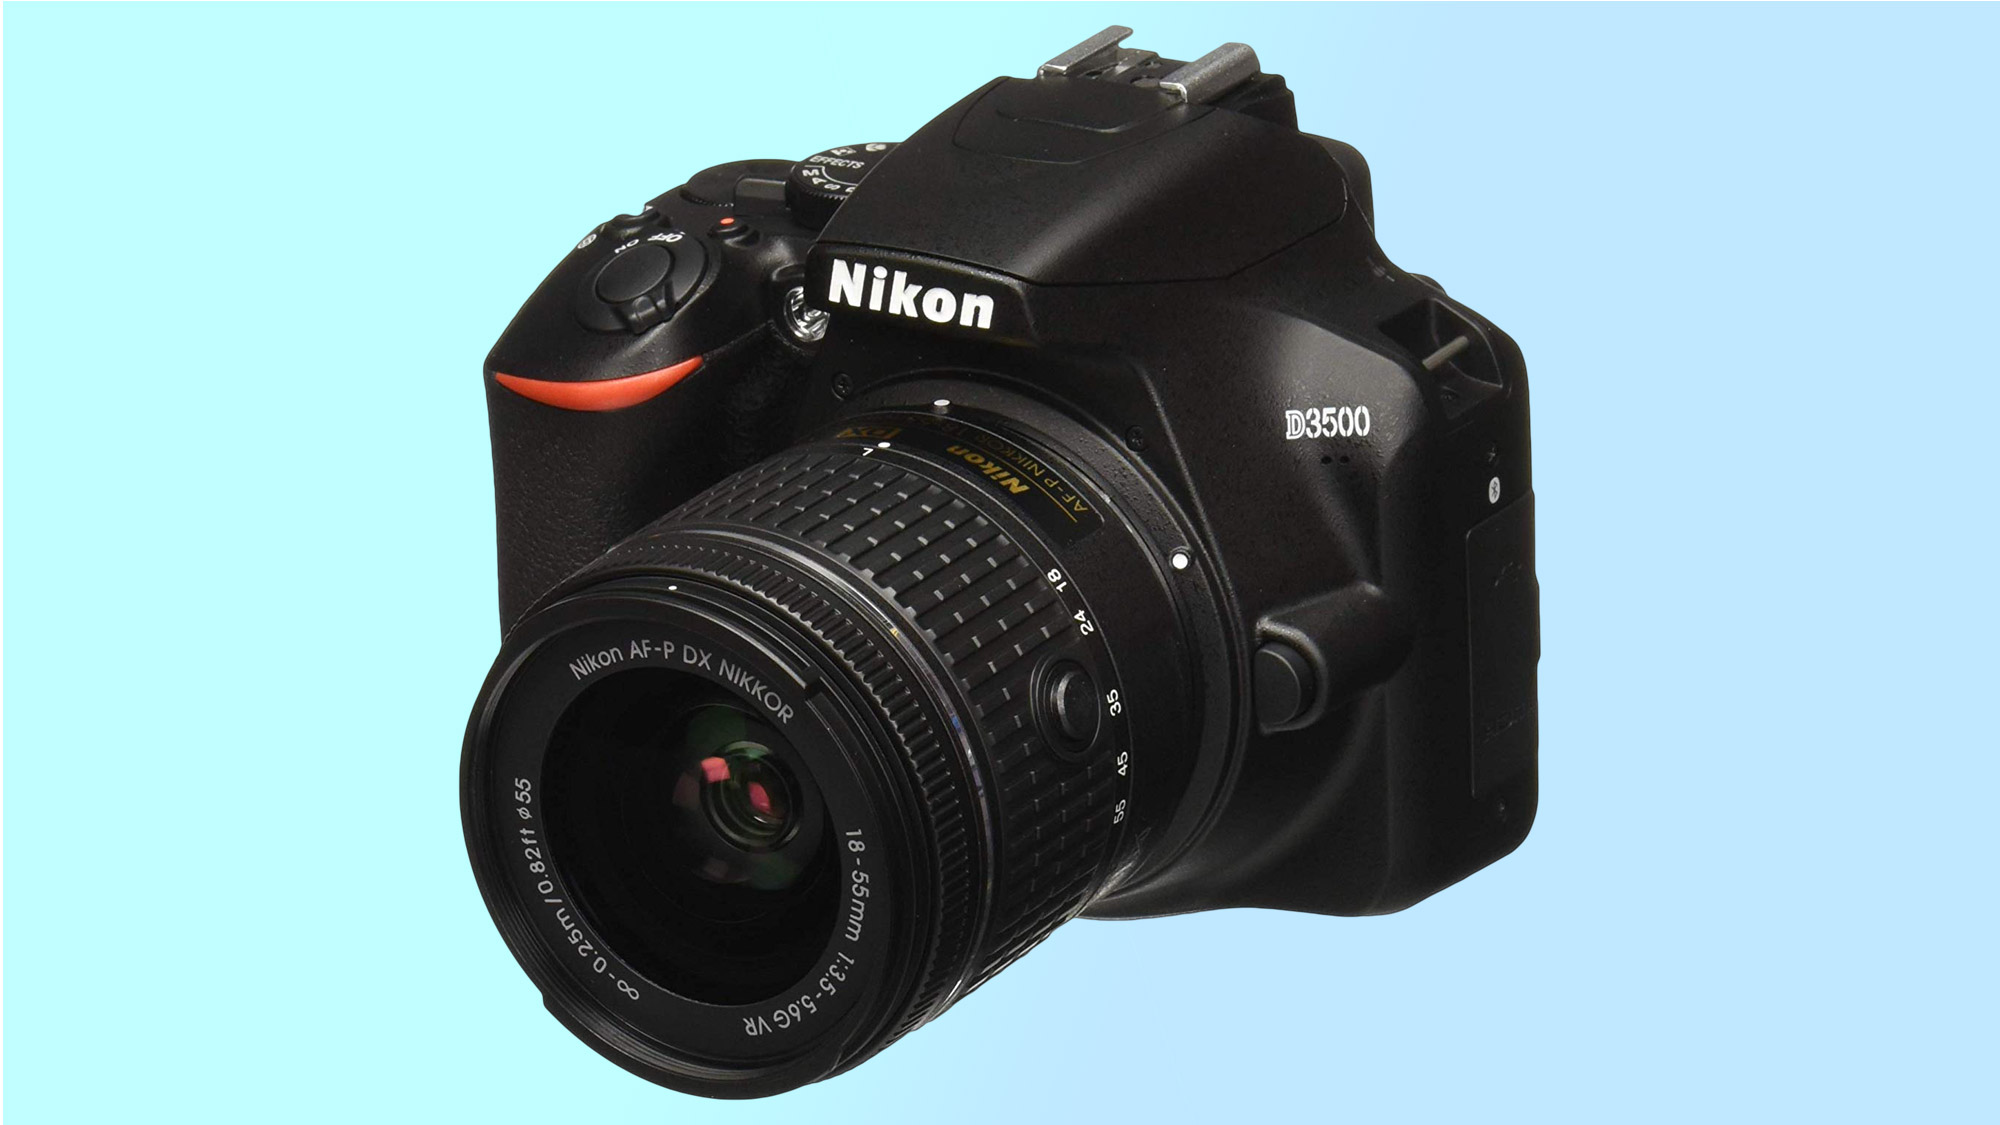 DSLR vs. mirrorless cameras: Nikon D3500